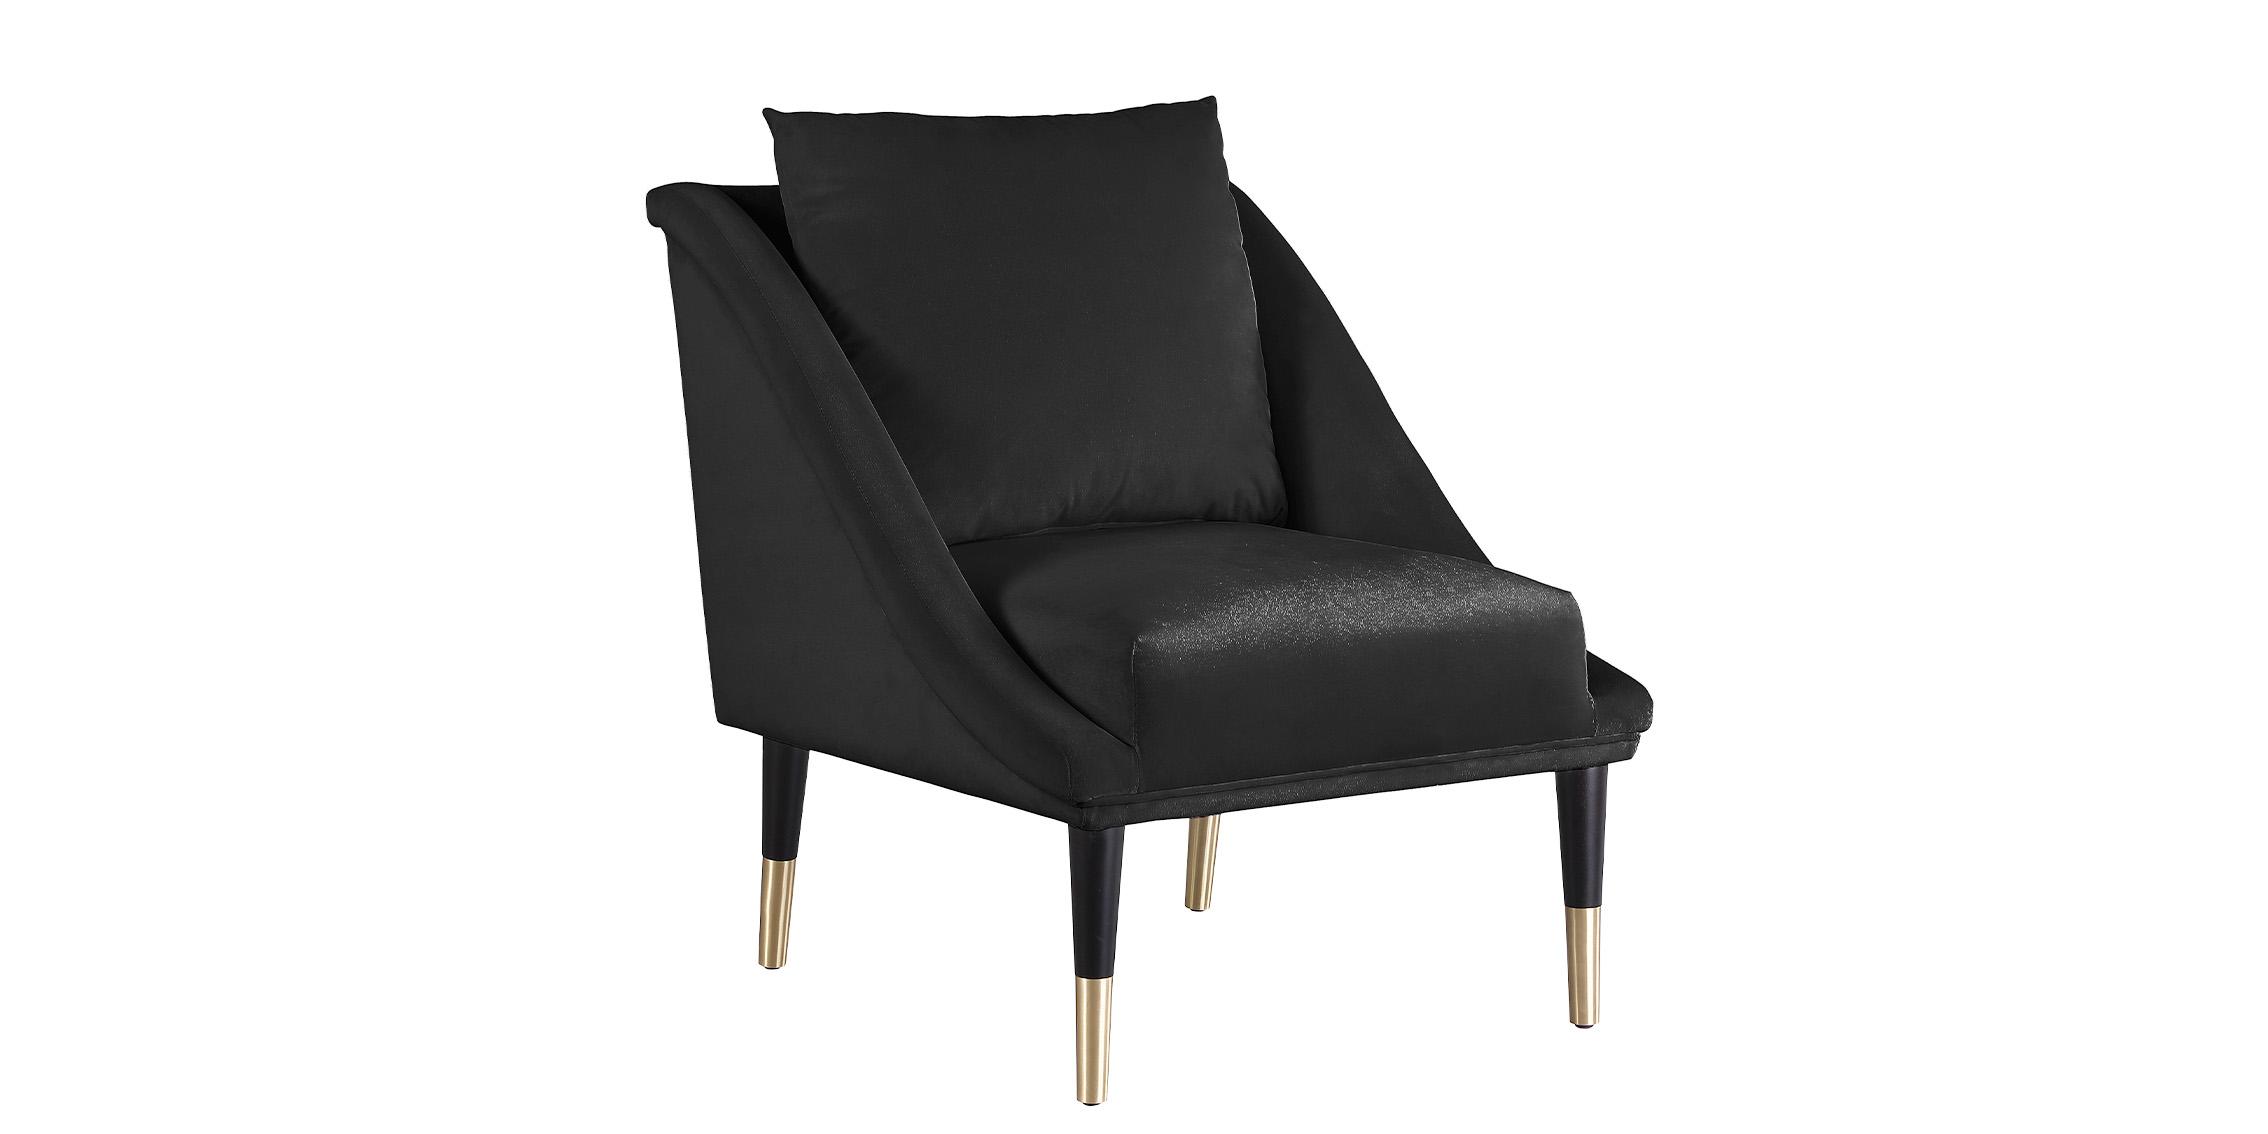 Contemporary, Modern Accent Chair ELEGANTE 517Black-C 517Black-C in Black Velvet